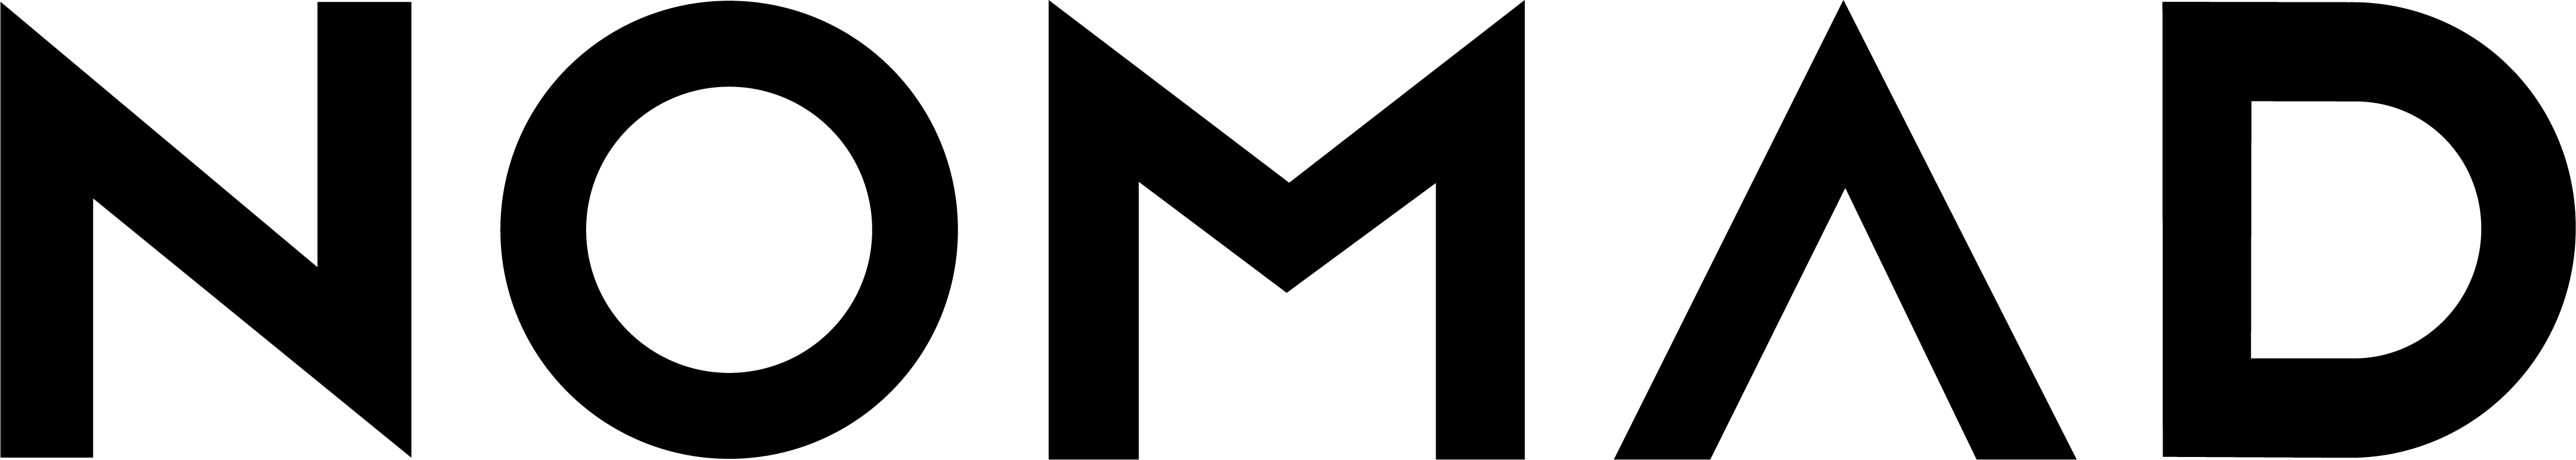 Nomad - Leather Loop - logo